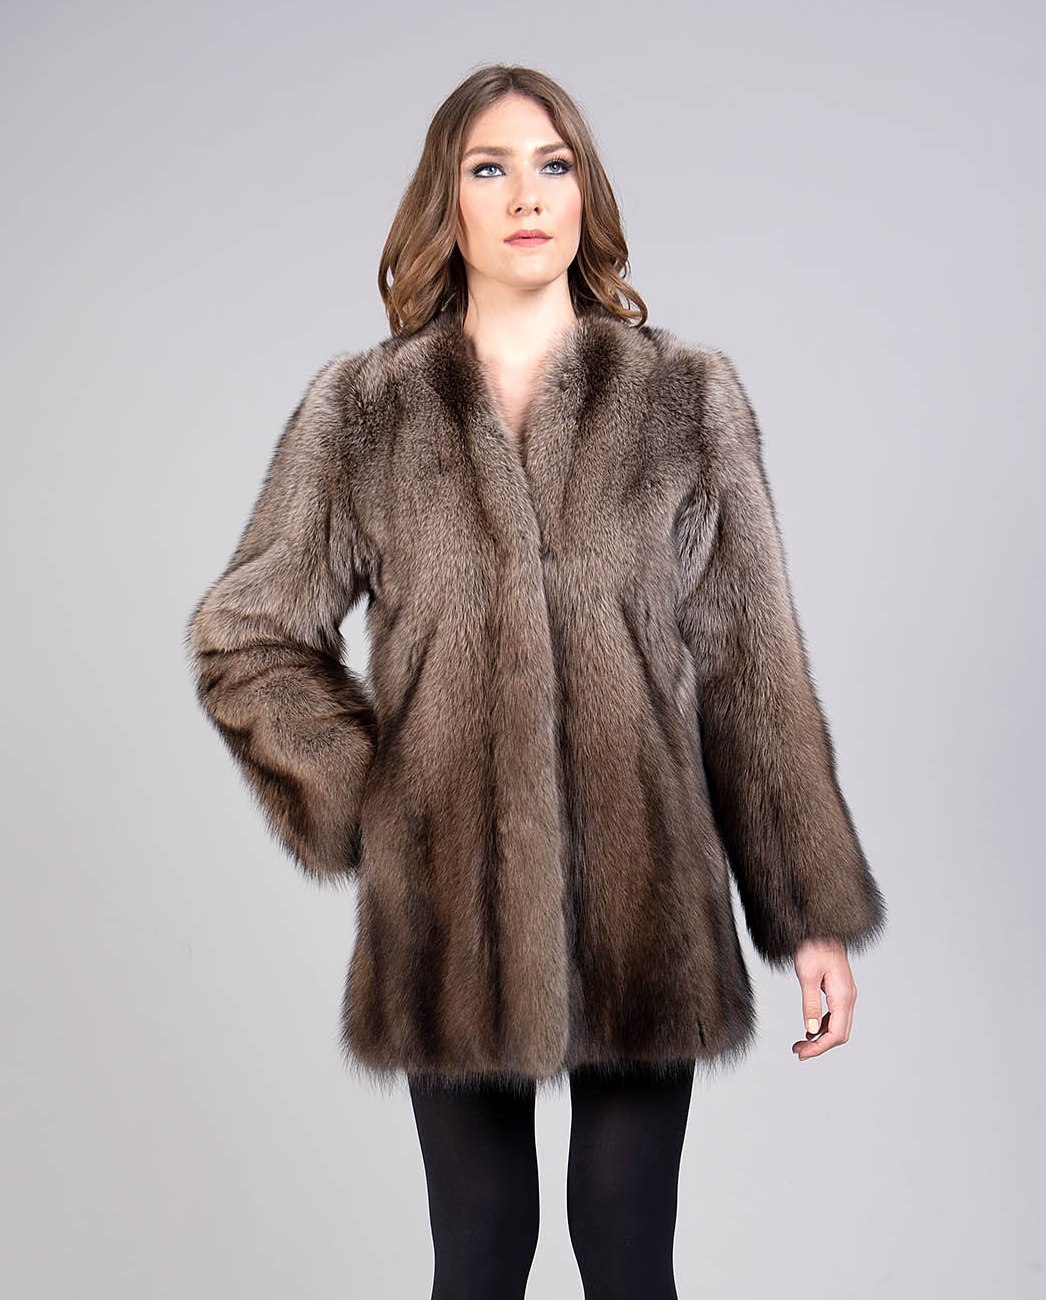 Kn Furs – Online Store